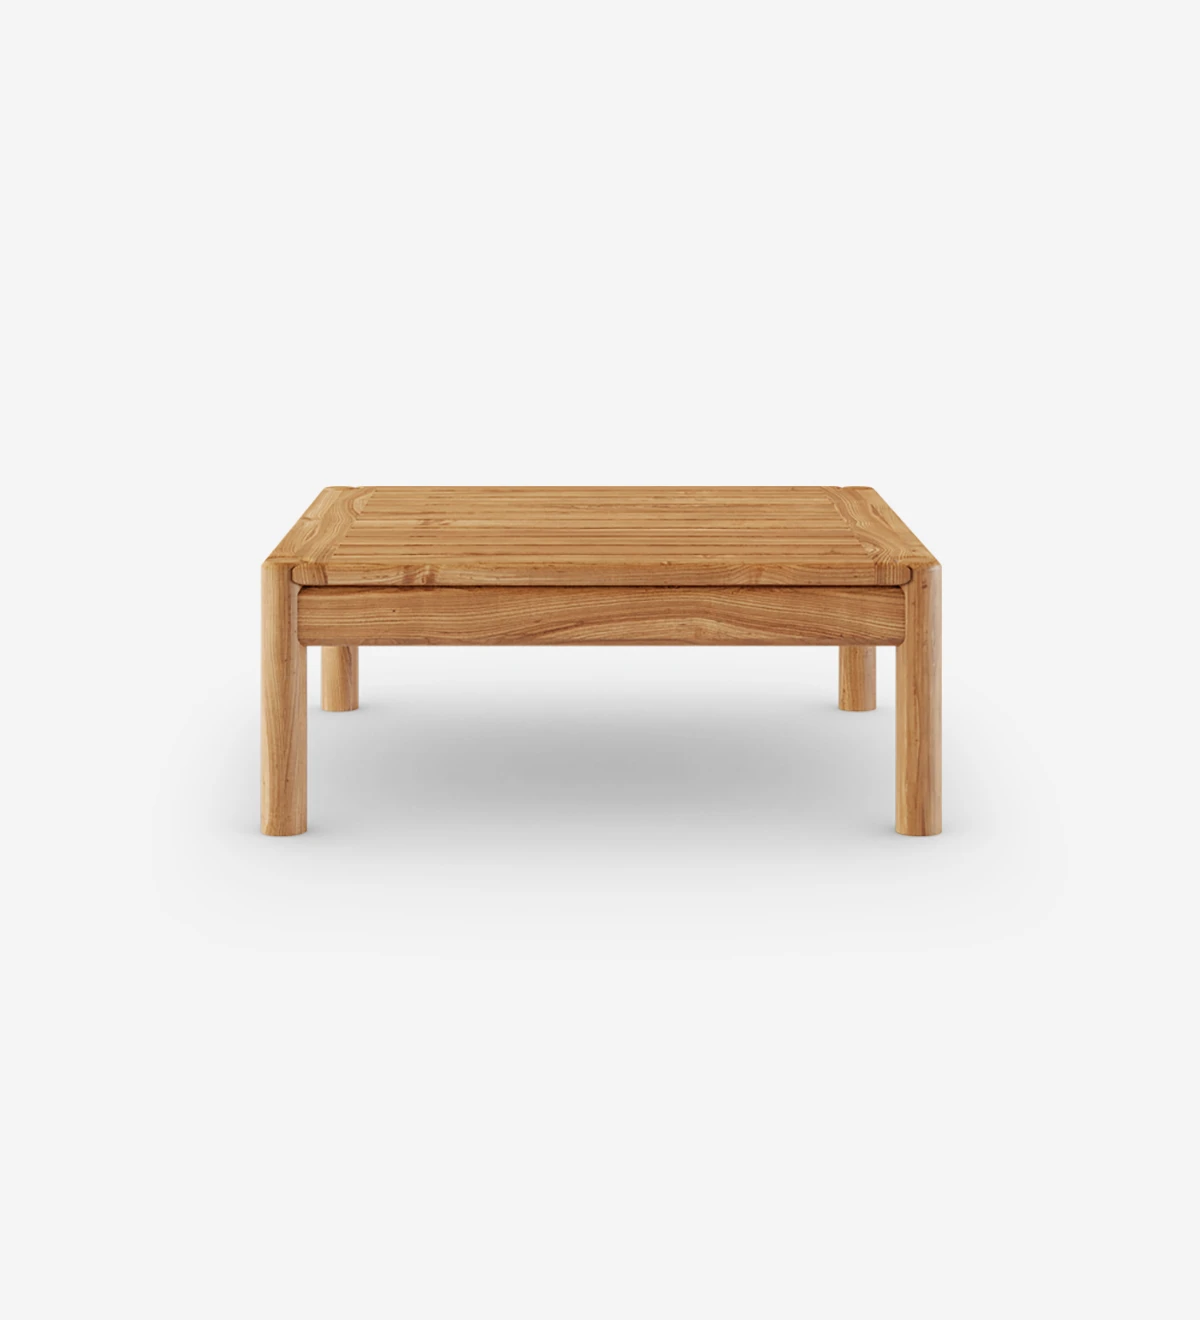 Mesa de centro cuadrada en madera natural